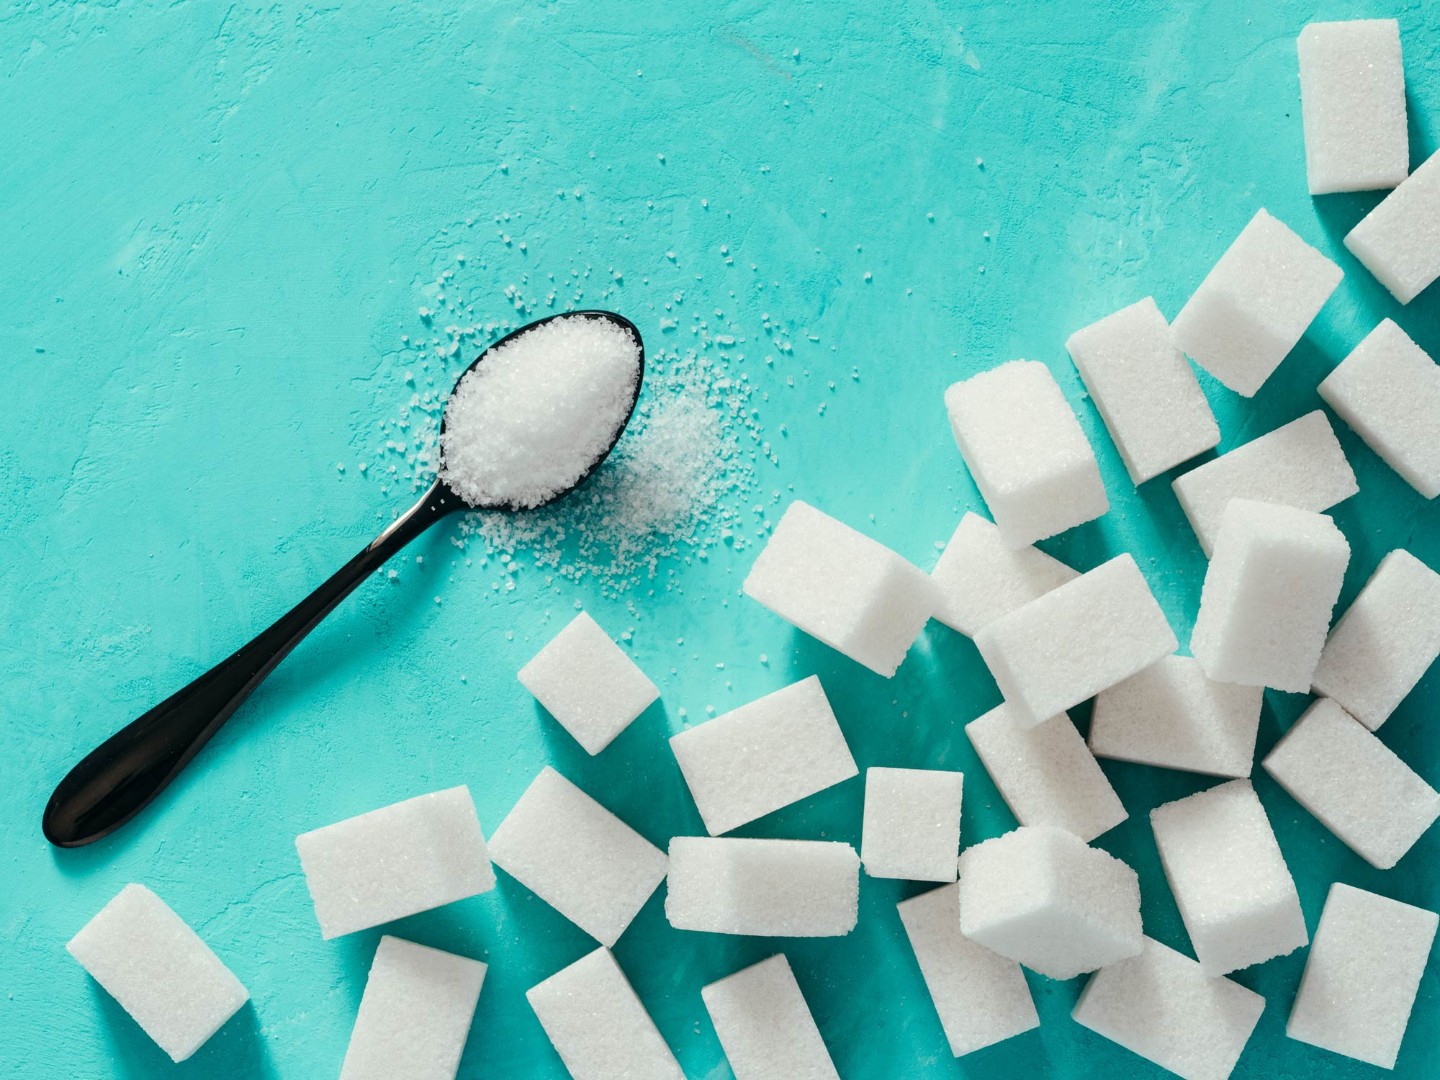 sugar||diabetes testing